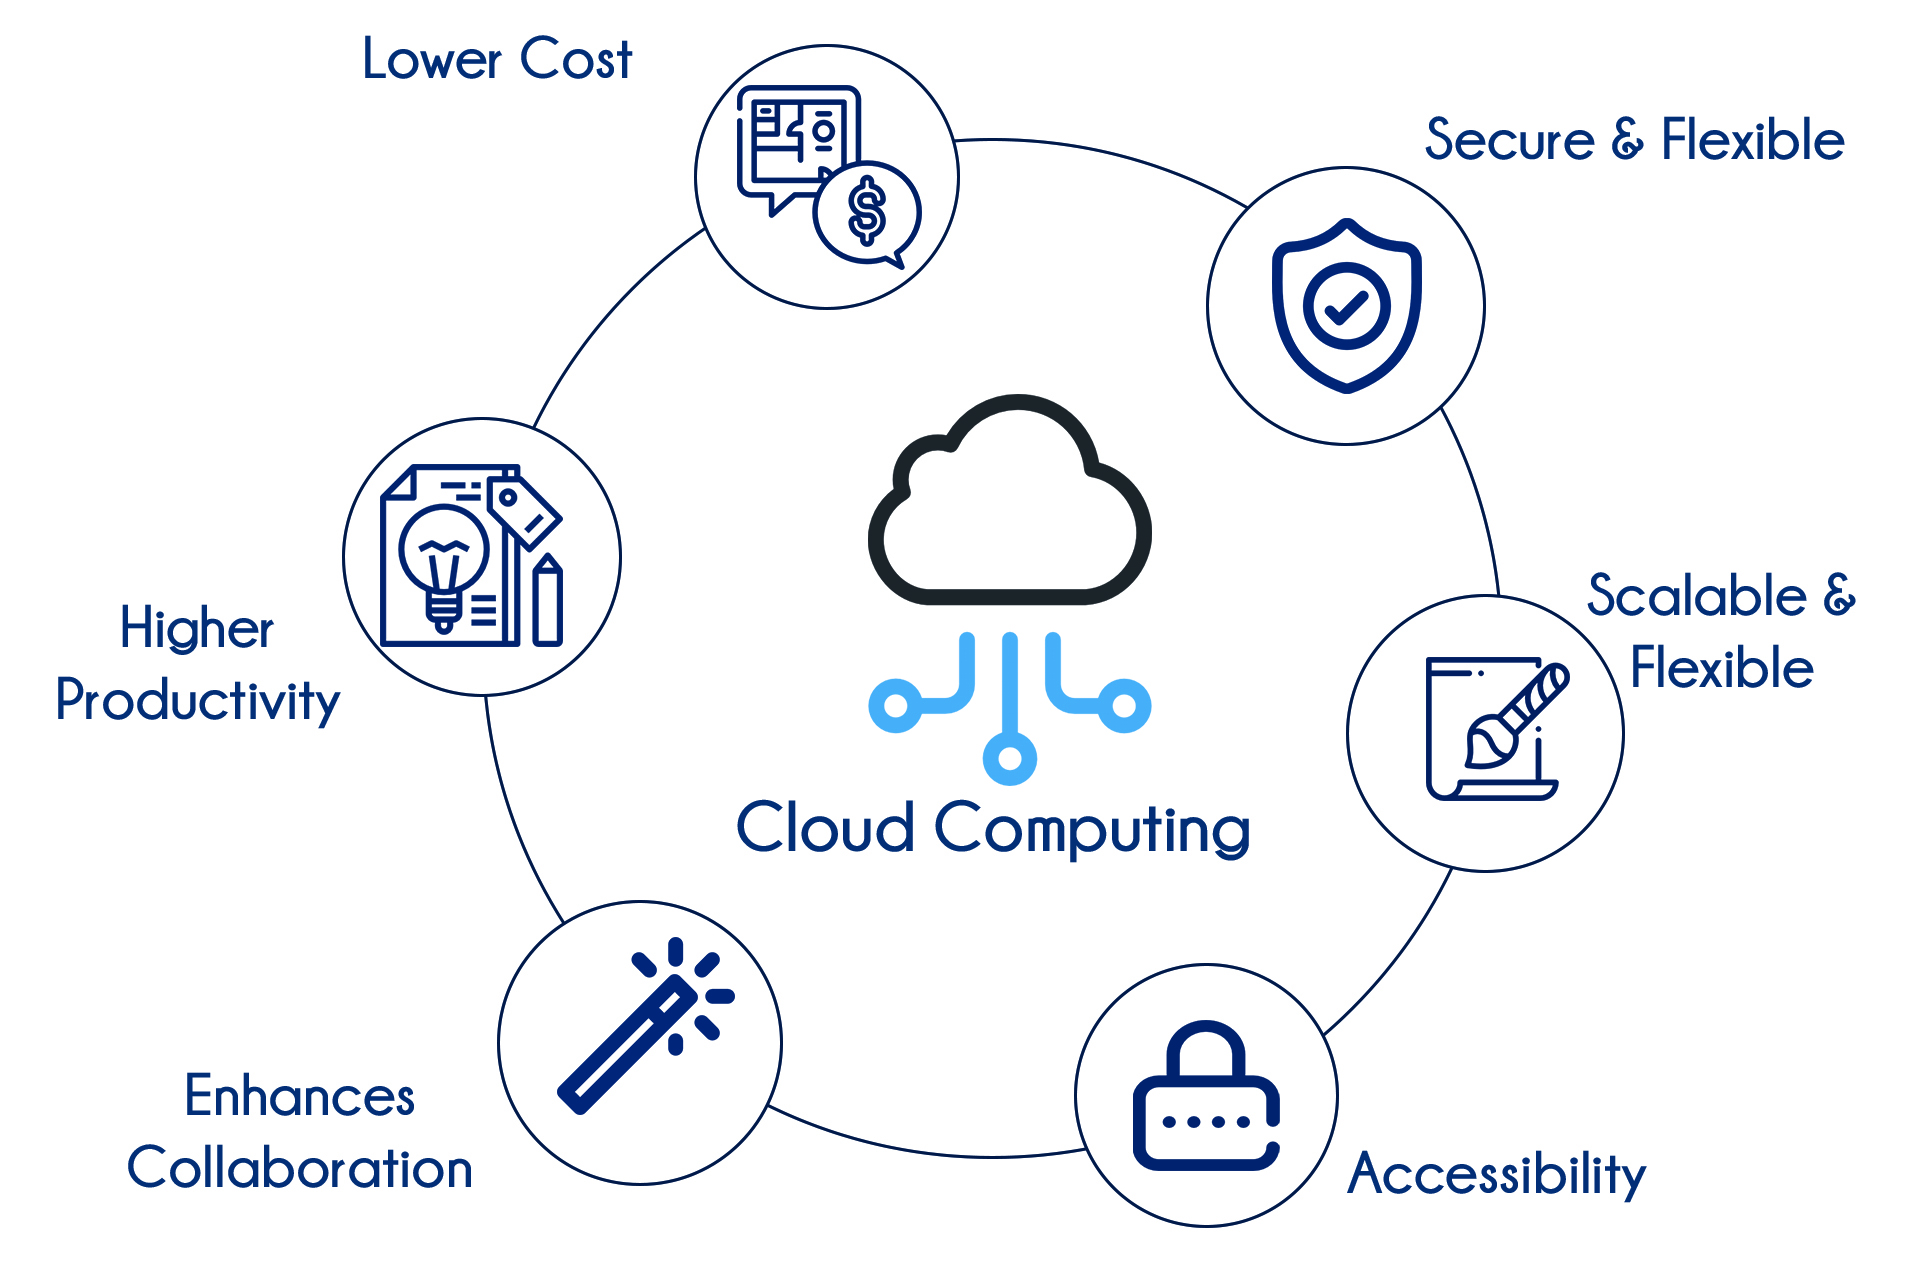 Cloud Computing Training in Bangalore